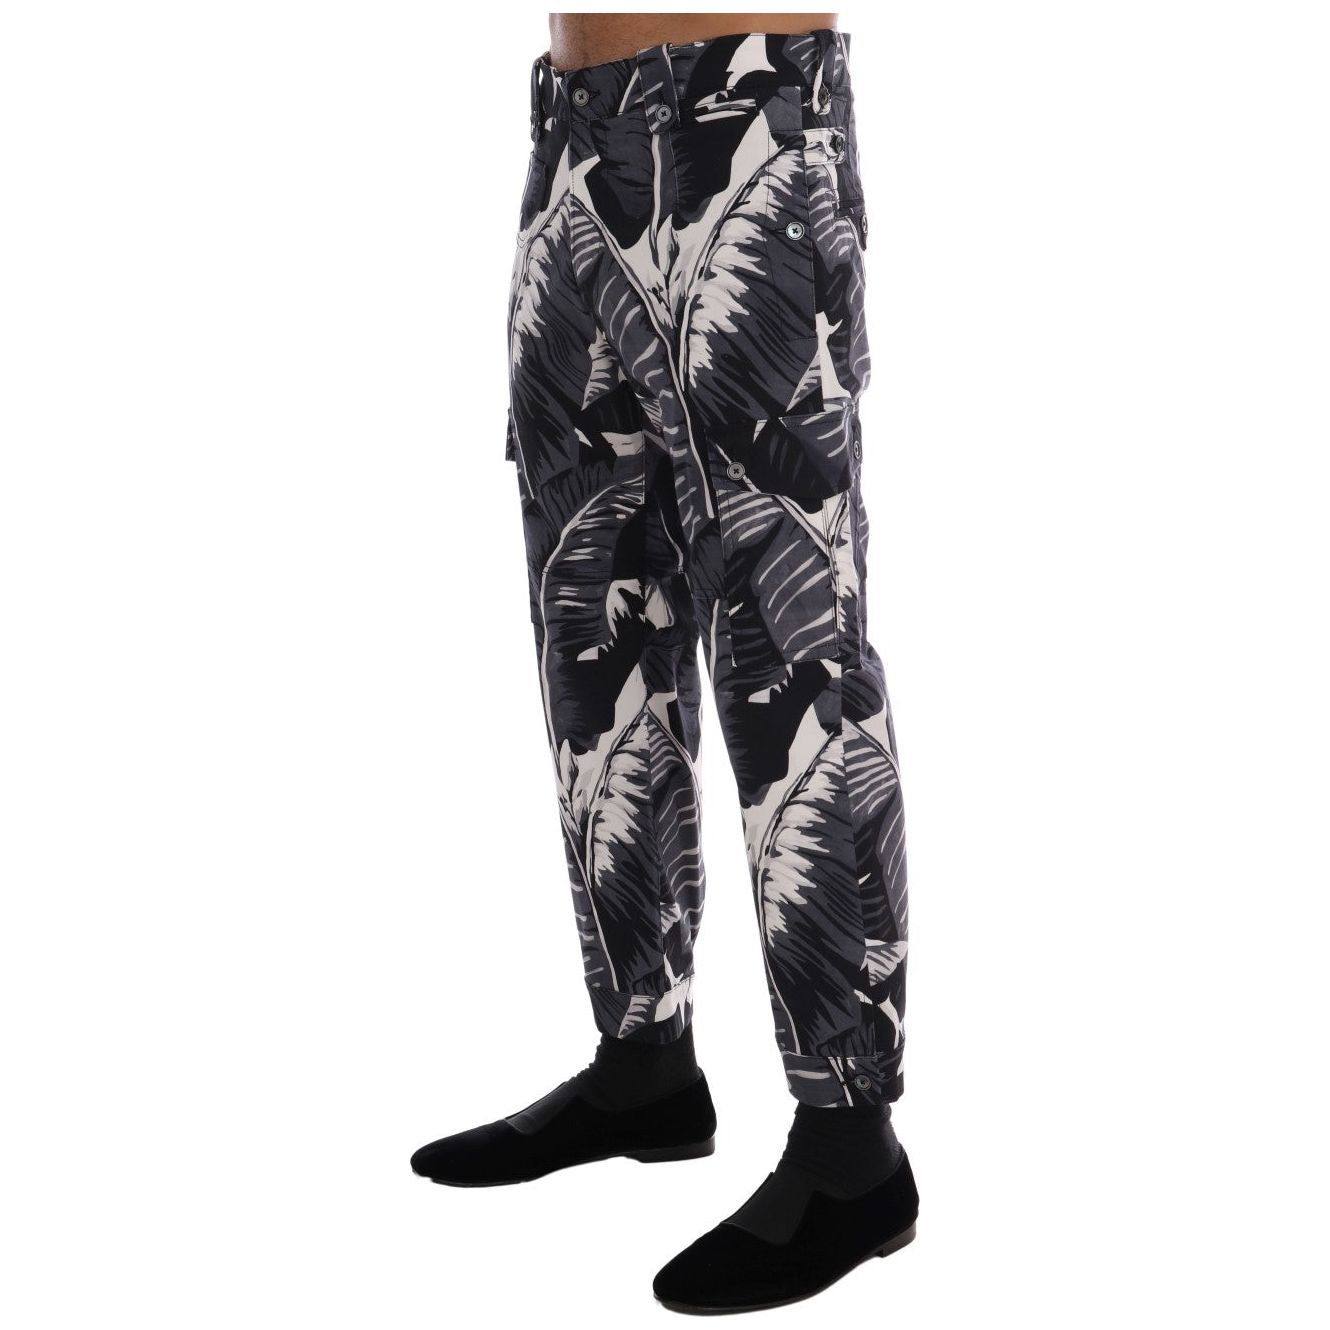 Dolce & GabbanaElegant Capri Casual Pants in Banana Leaf PrintMcRichard Designer Brands£349.00